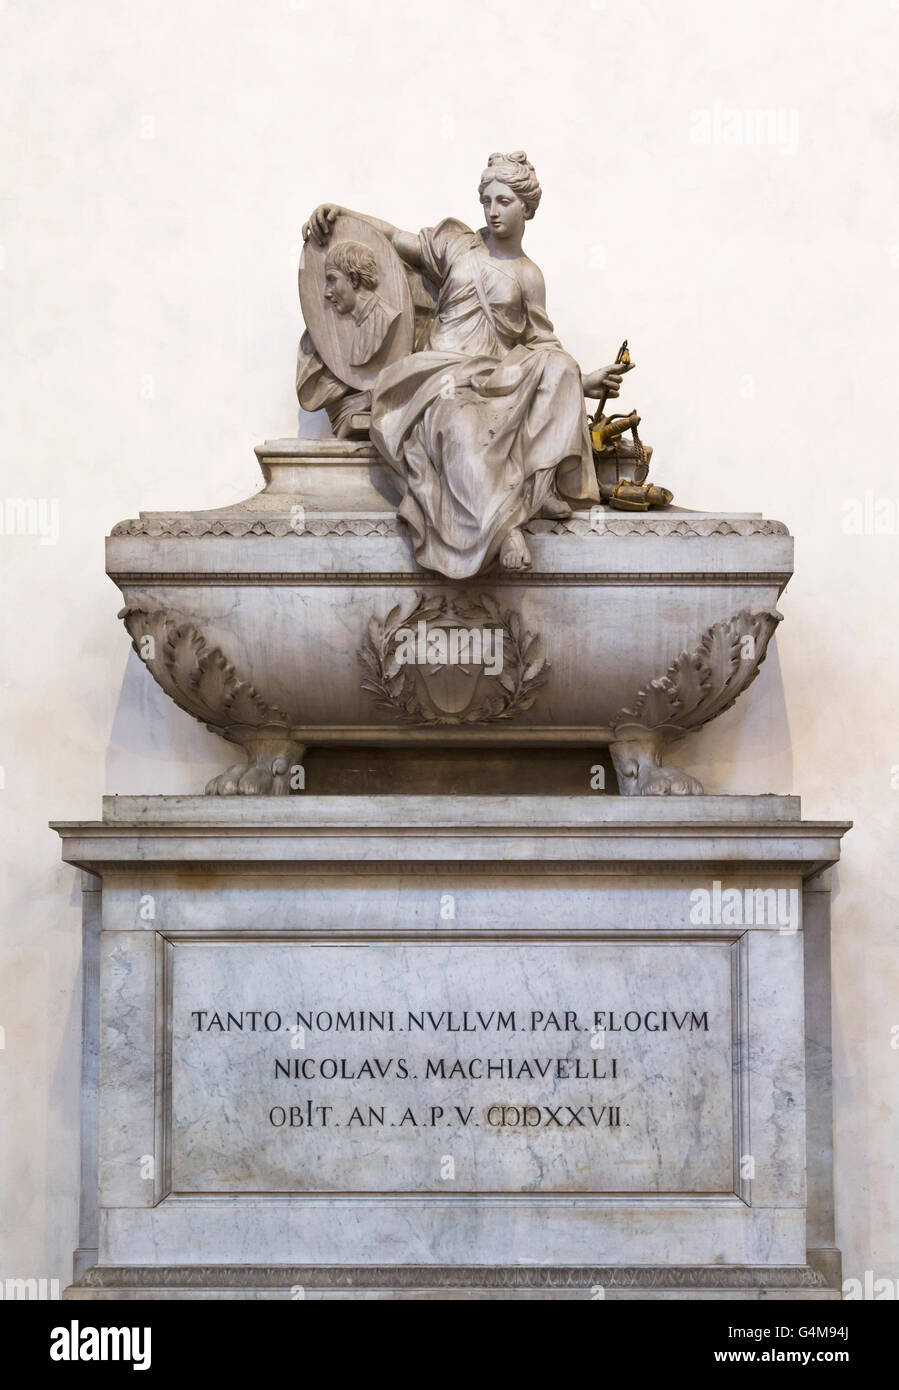 Firenze, Toscana, Italia. La Basilica di Santa Croce. Tomba di Niccolò Machiavelli. Foto Stock